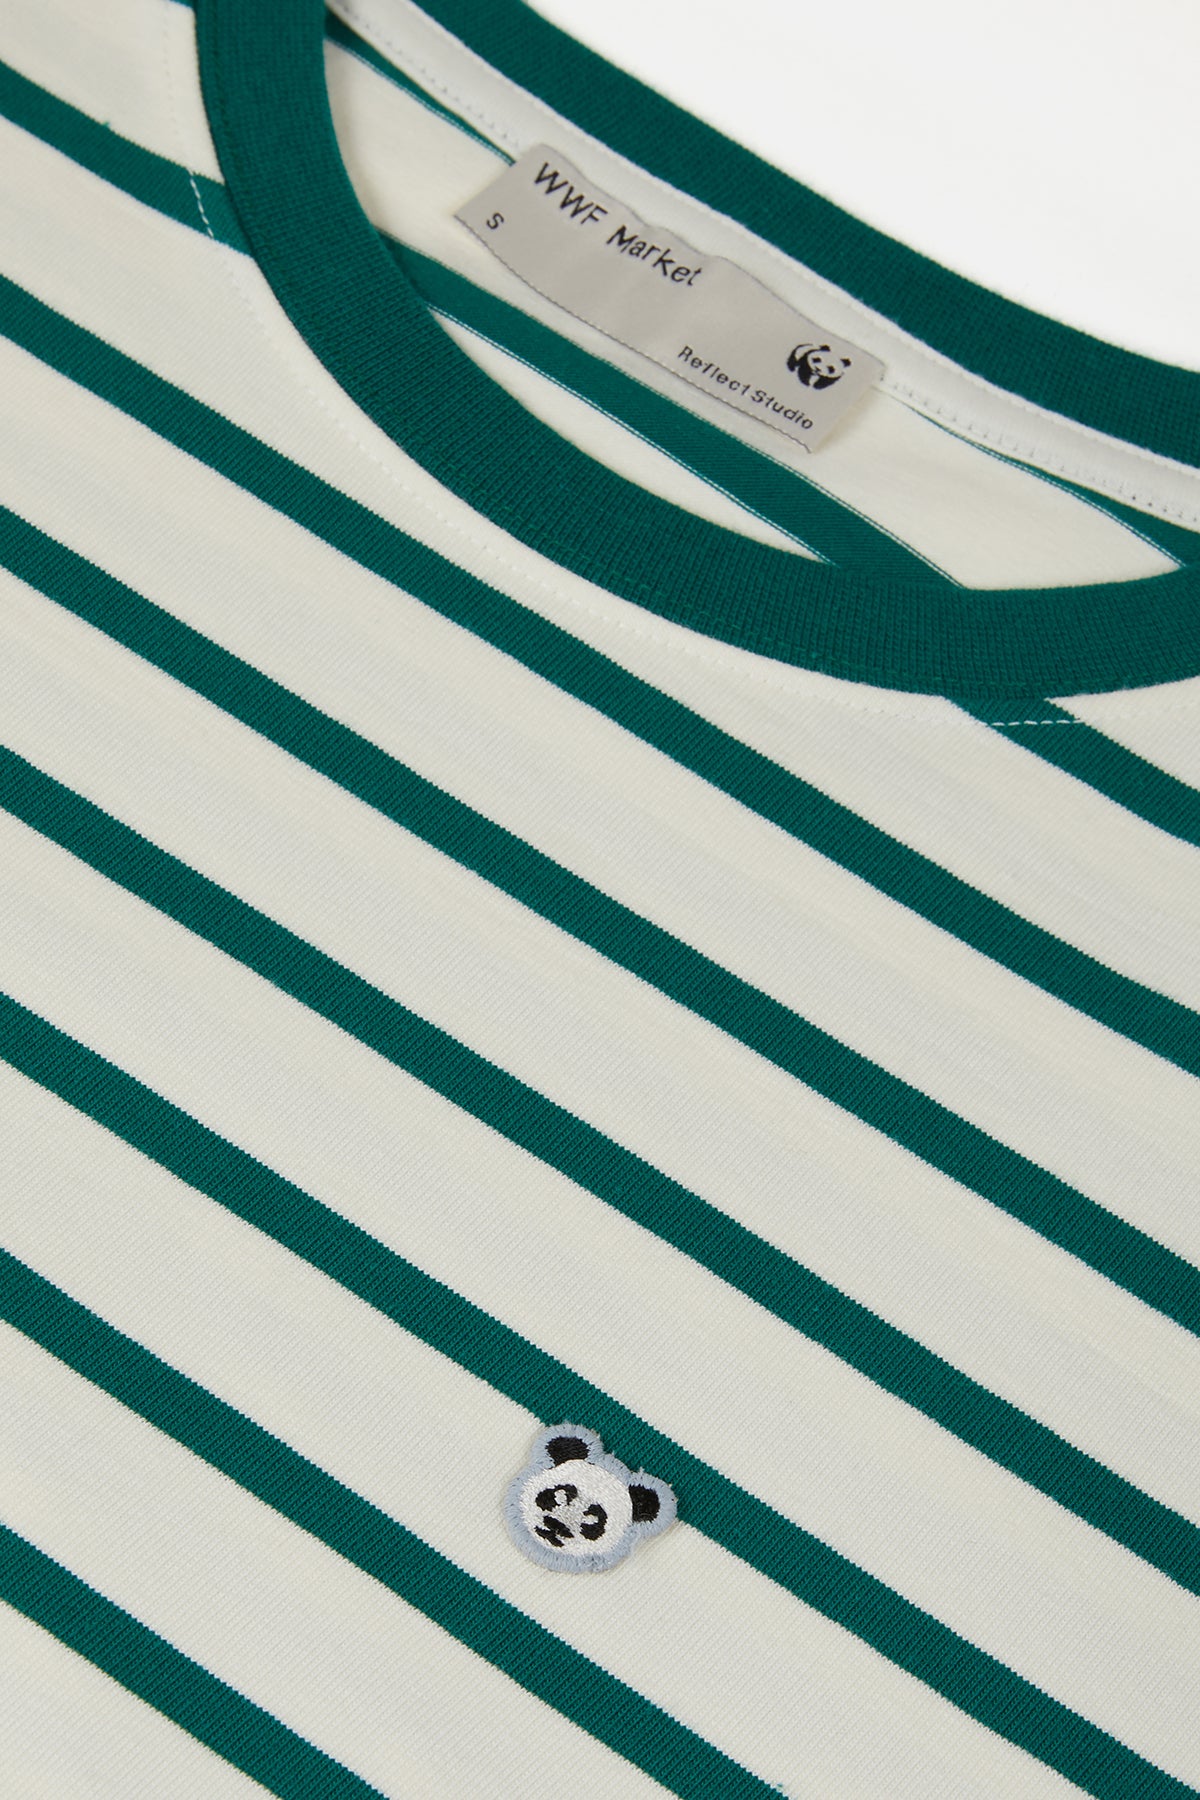 Panda Supreme  Çizgili Uzun Kollu T-Shirt - Yeşil/Krem